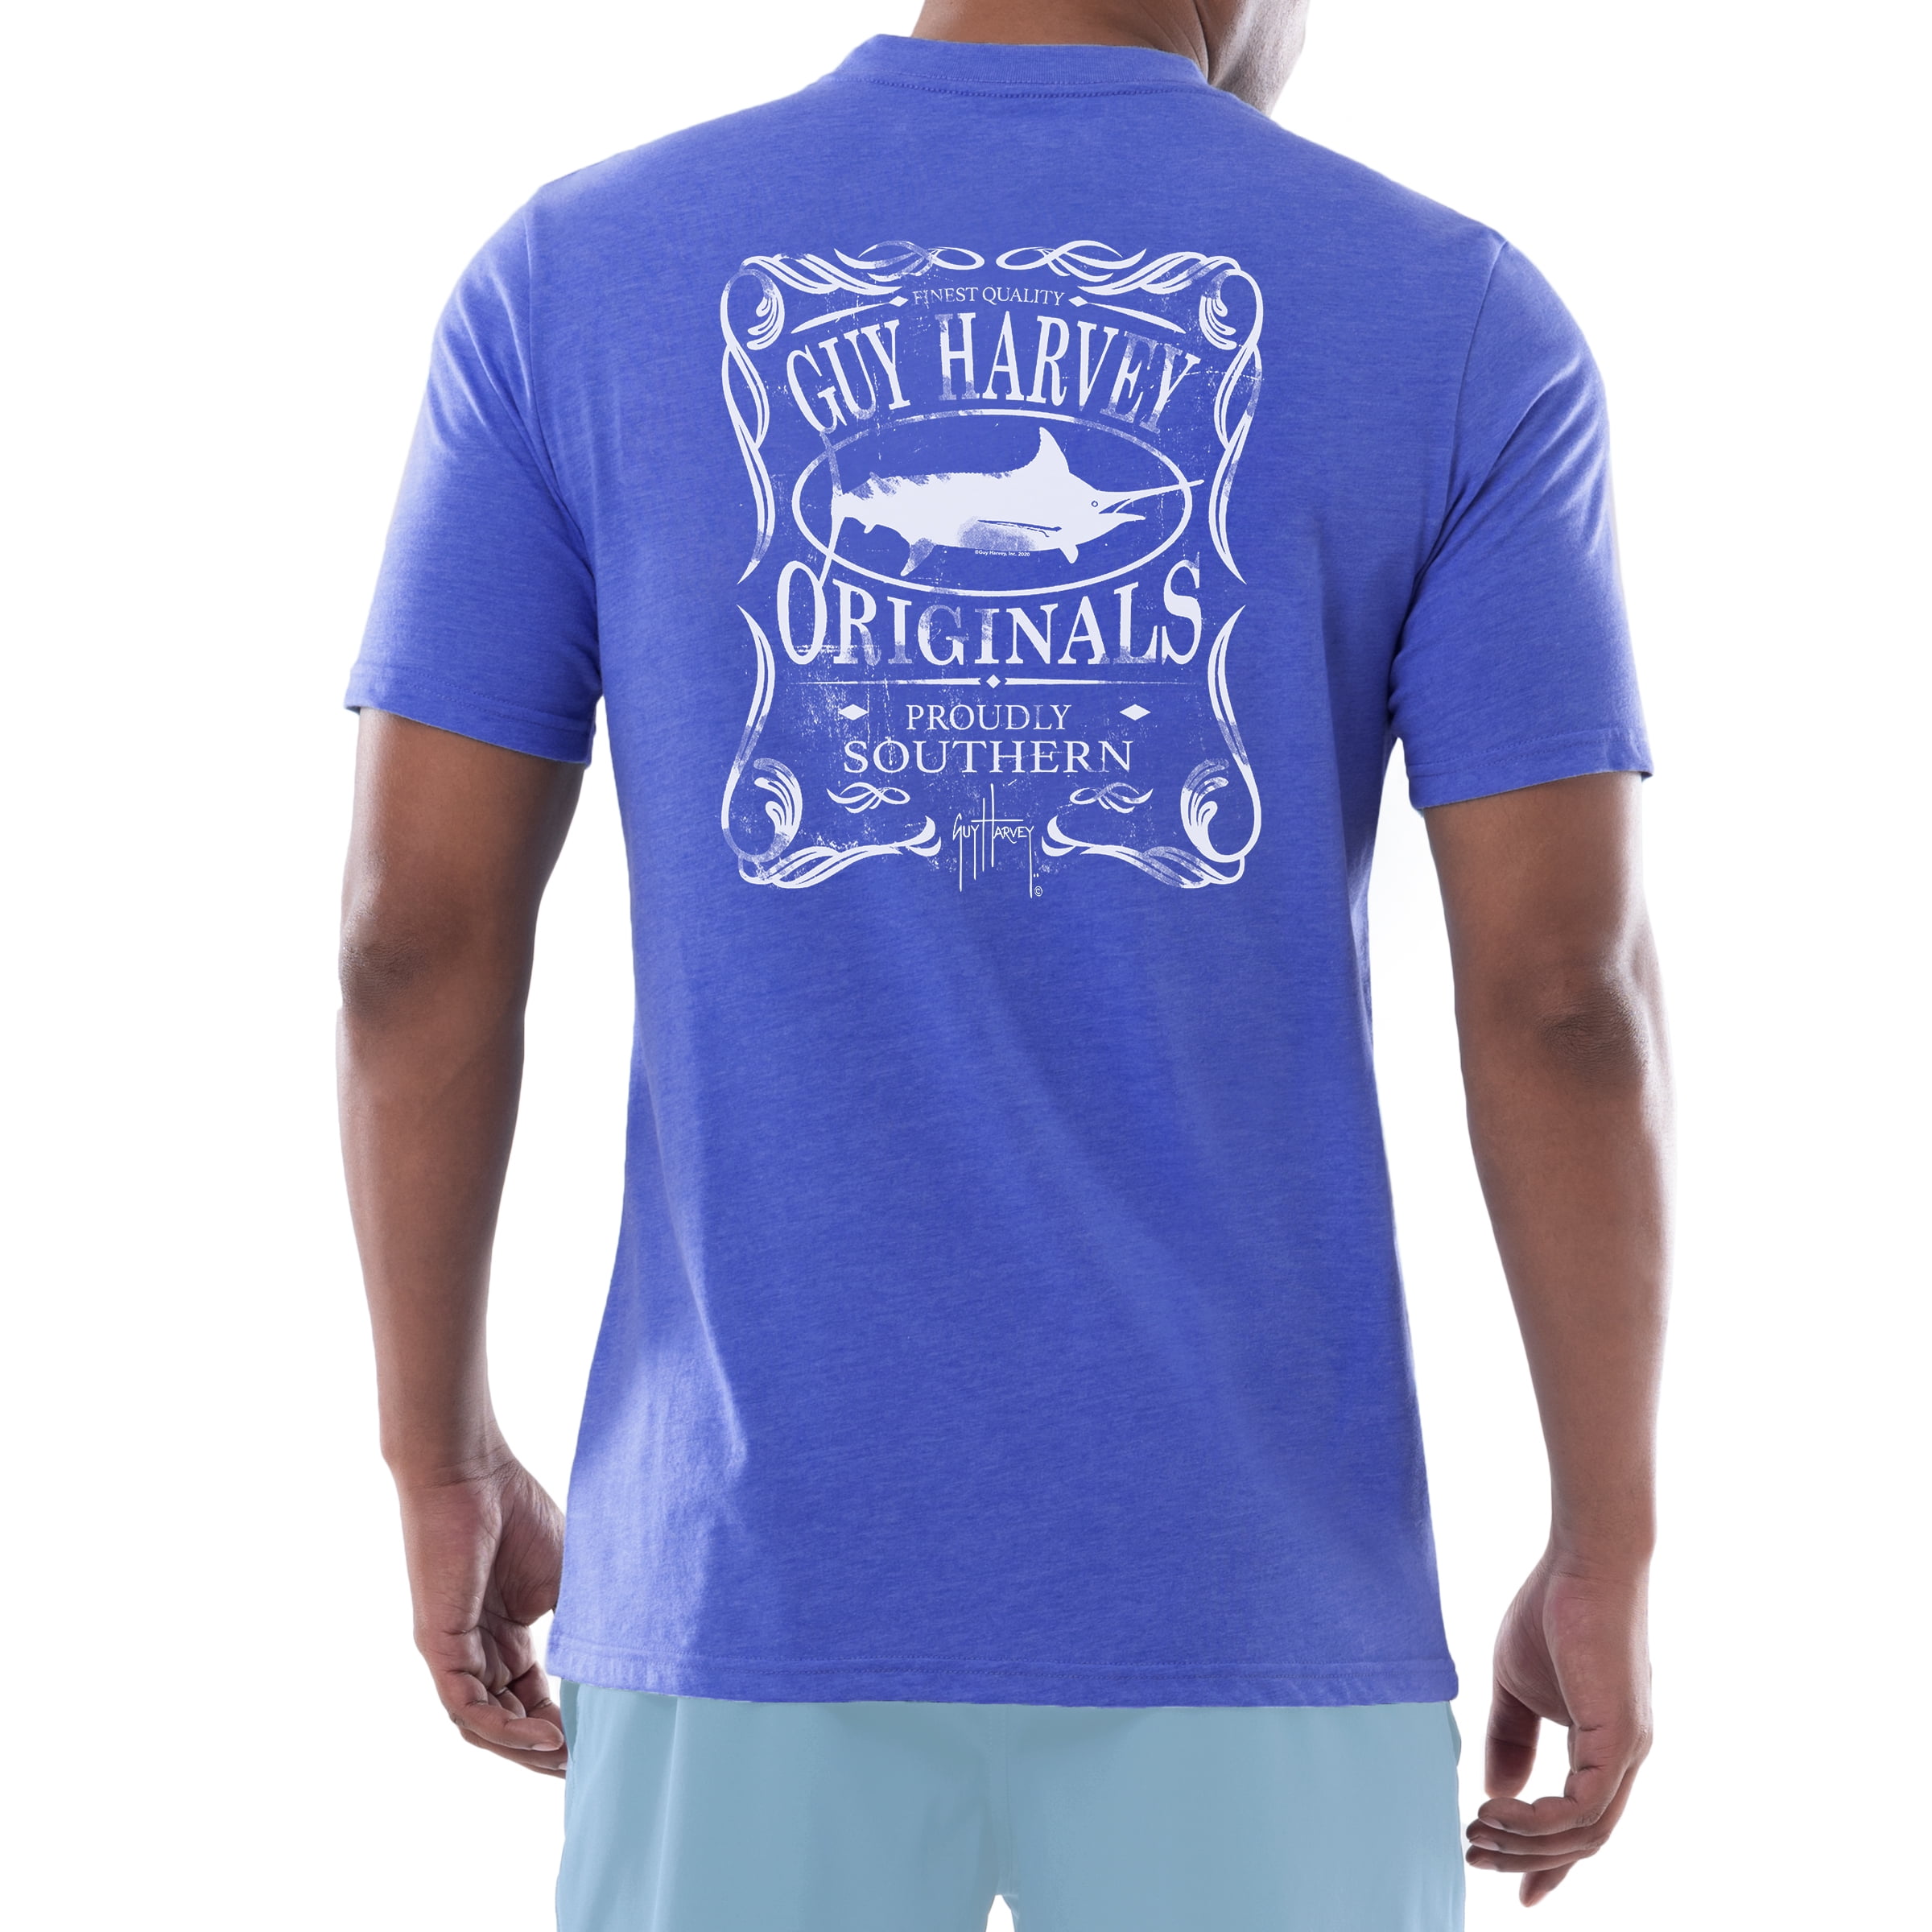 Guy Harvey Men's Marlin Stripes Short Sleeve Pocket Crew Neck T-Shirt 